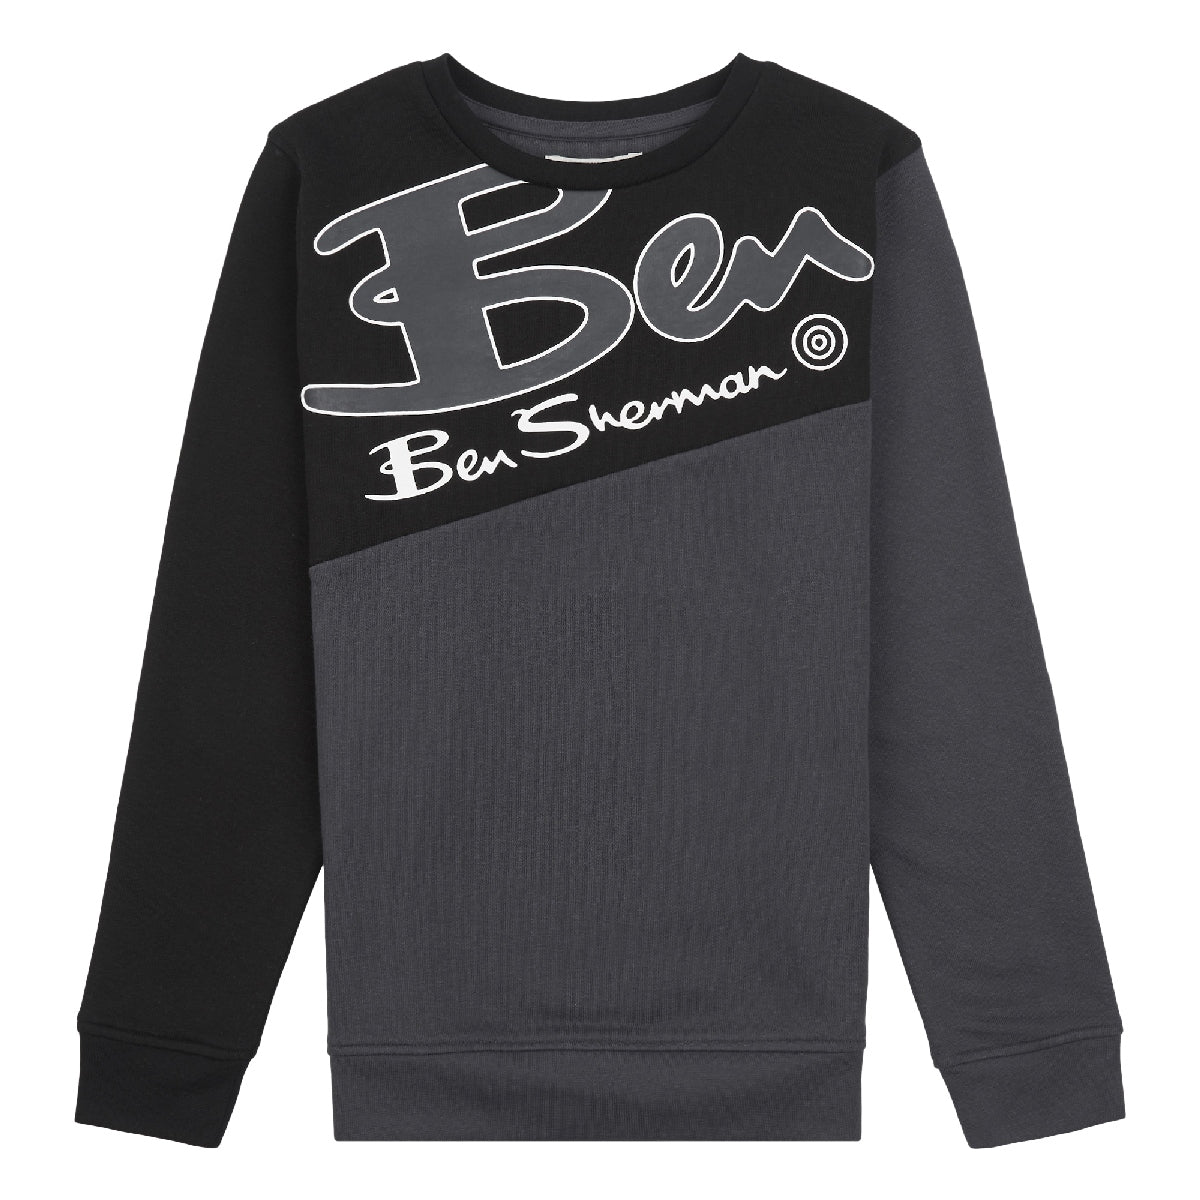 Ben Sherman Graphic Print Crew Neck Sweatshirt BSS1015B91